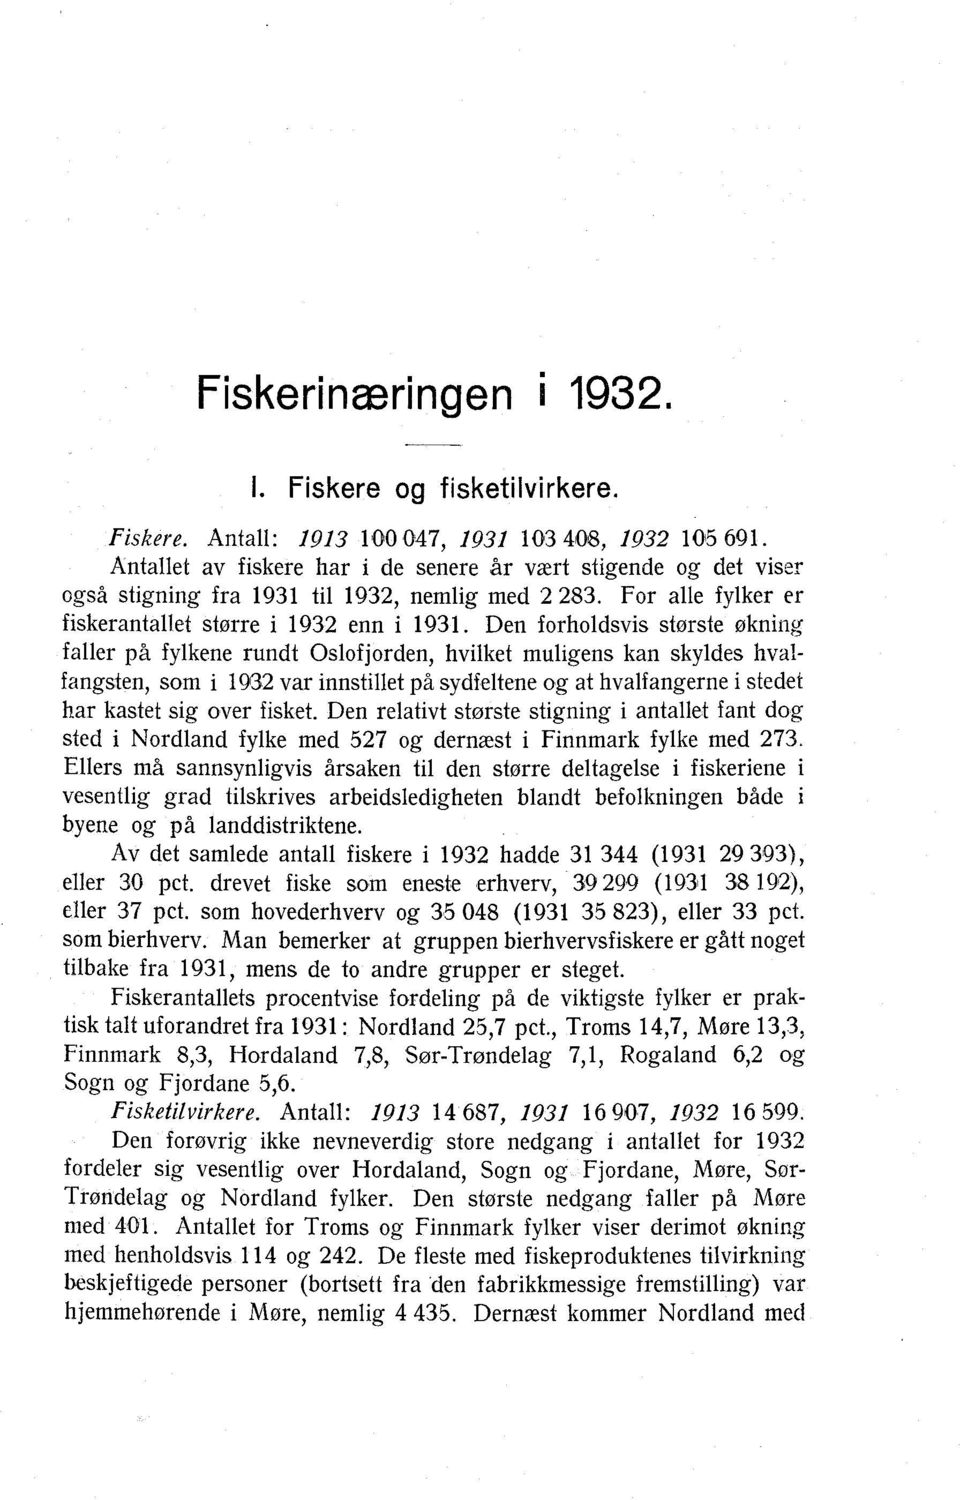 Den forholdsvis største økning faller på fylkene rundt Oslofjorden, hvilket muligens kan skyldes hvalfangsten, som i 1932 var innstillet på sydfeltene og at hvalfangerne i stedet har kastet sig over